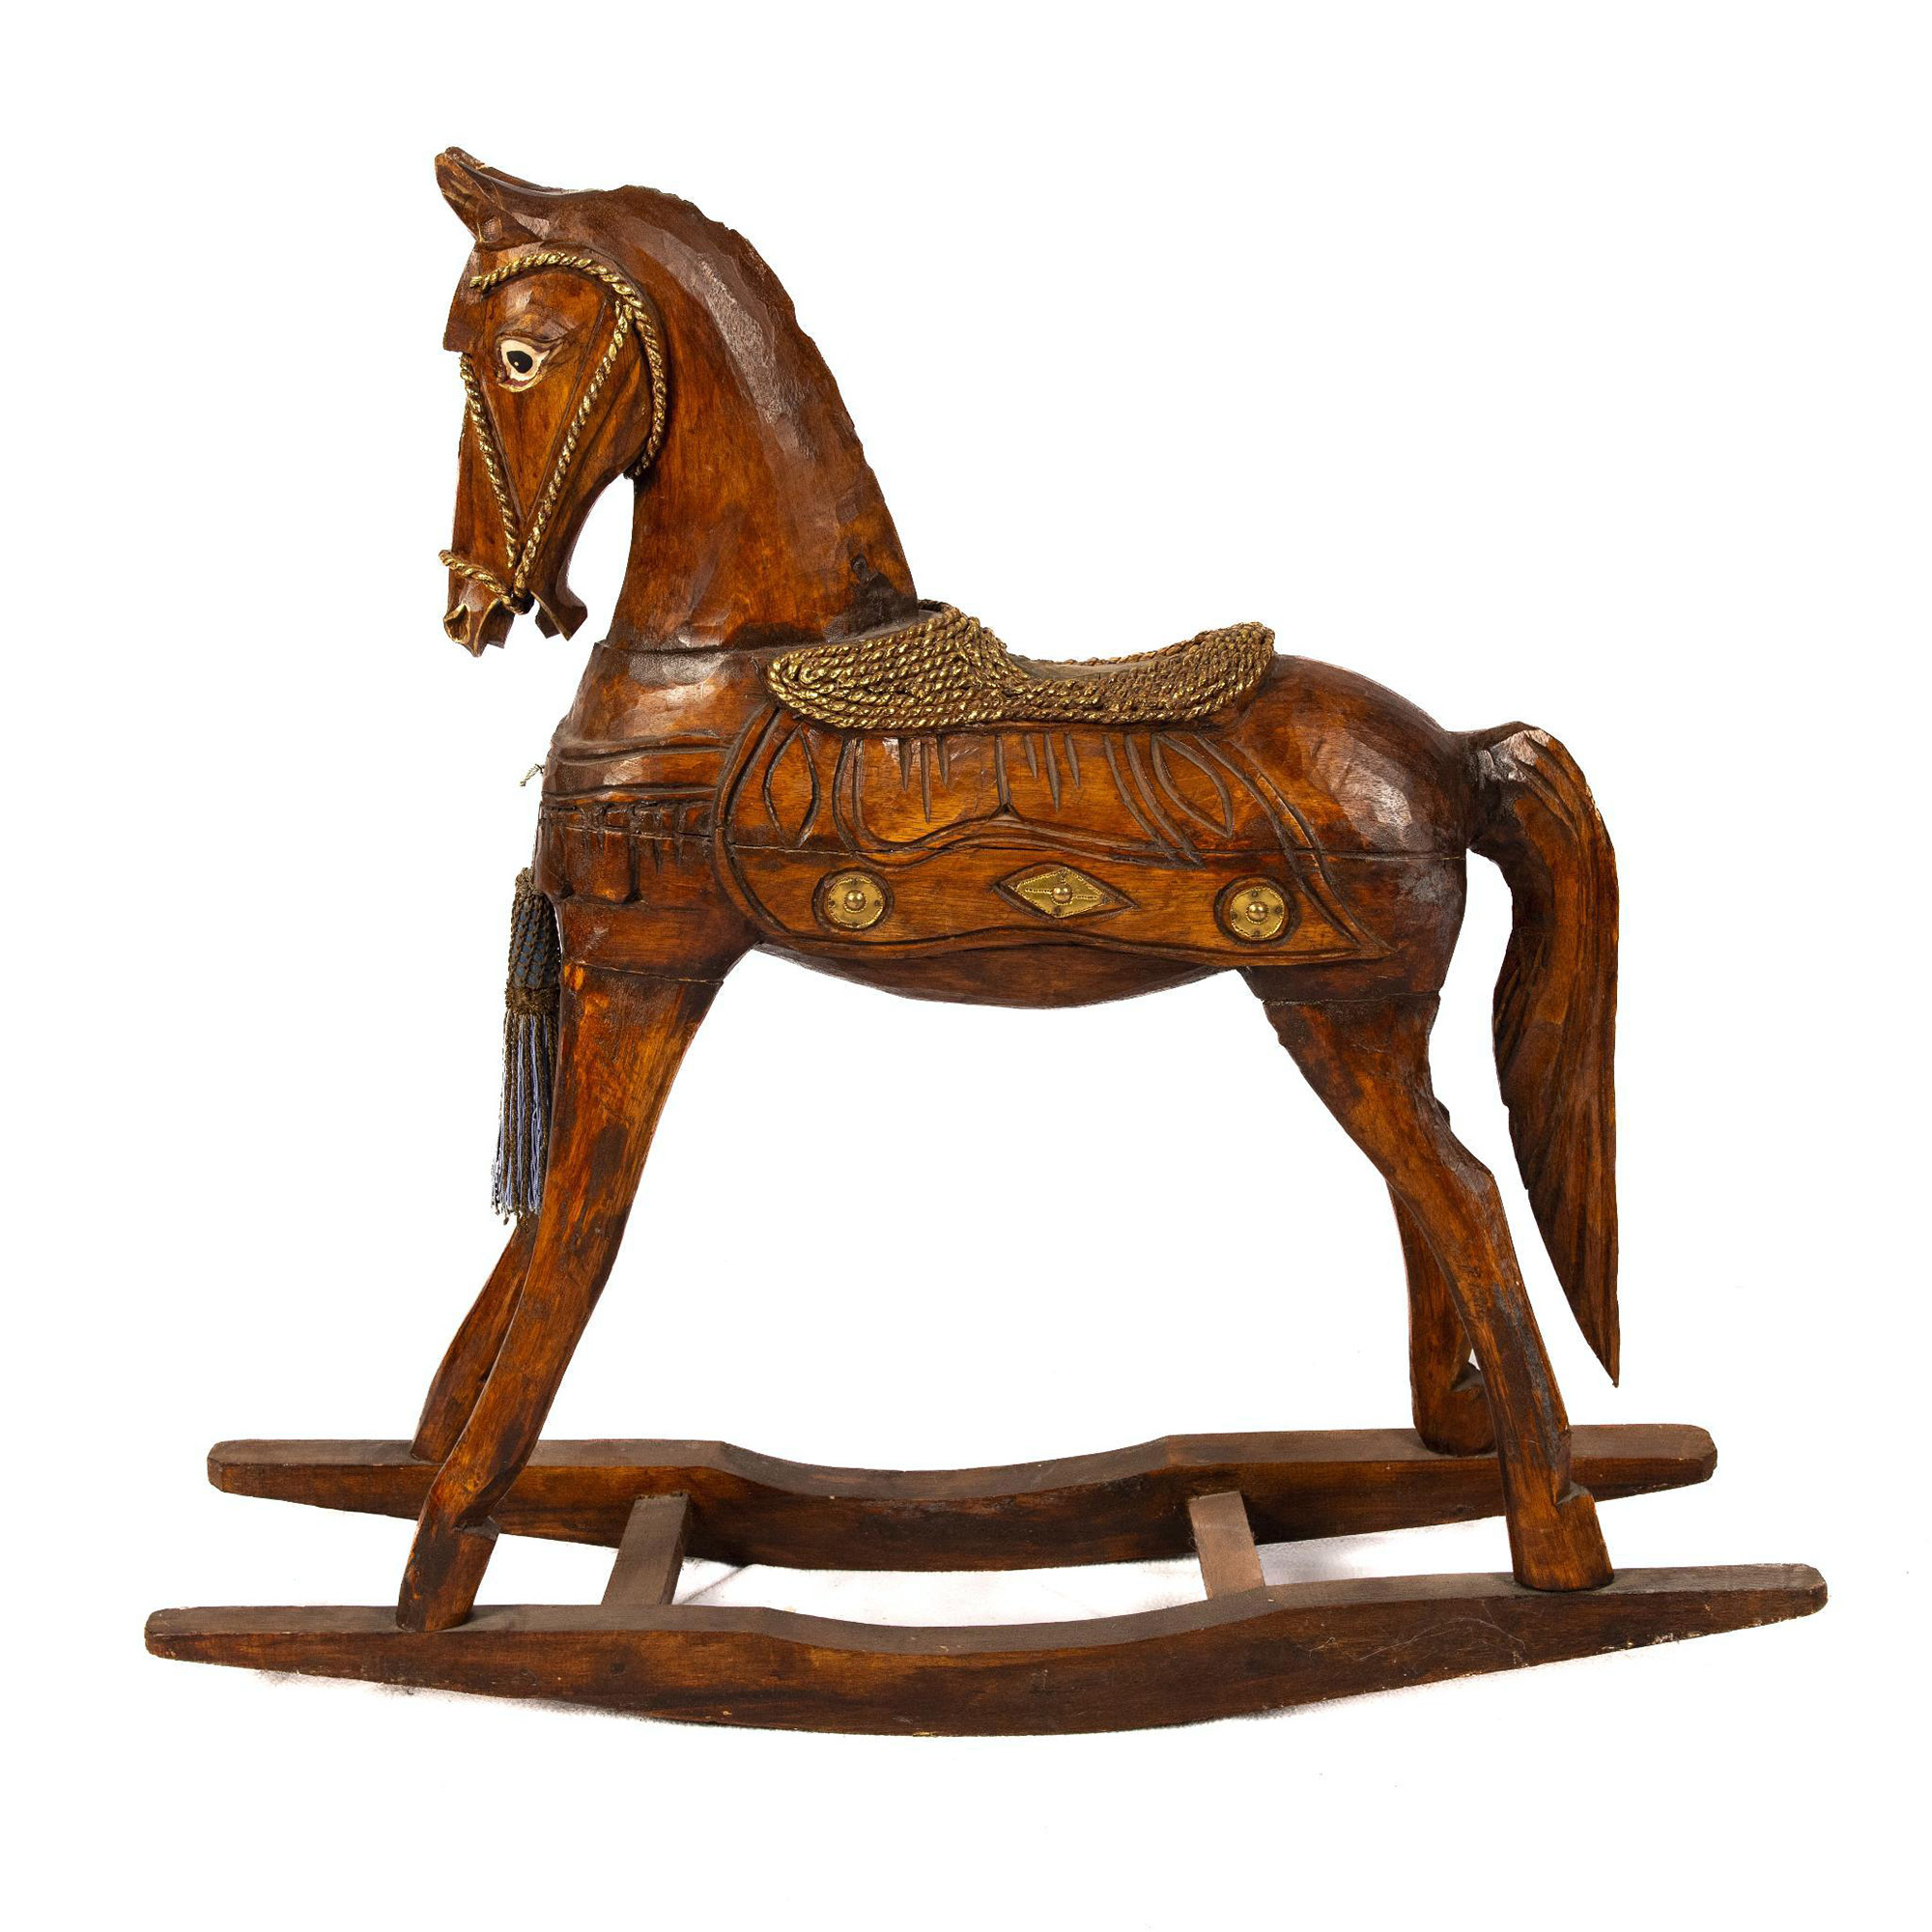 Decorative Wood-Stained Rocking Horse - Image 2 of 6